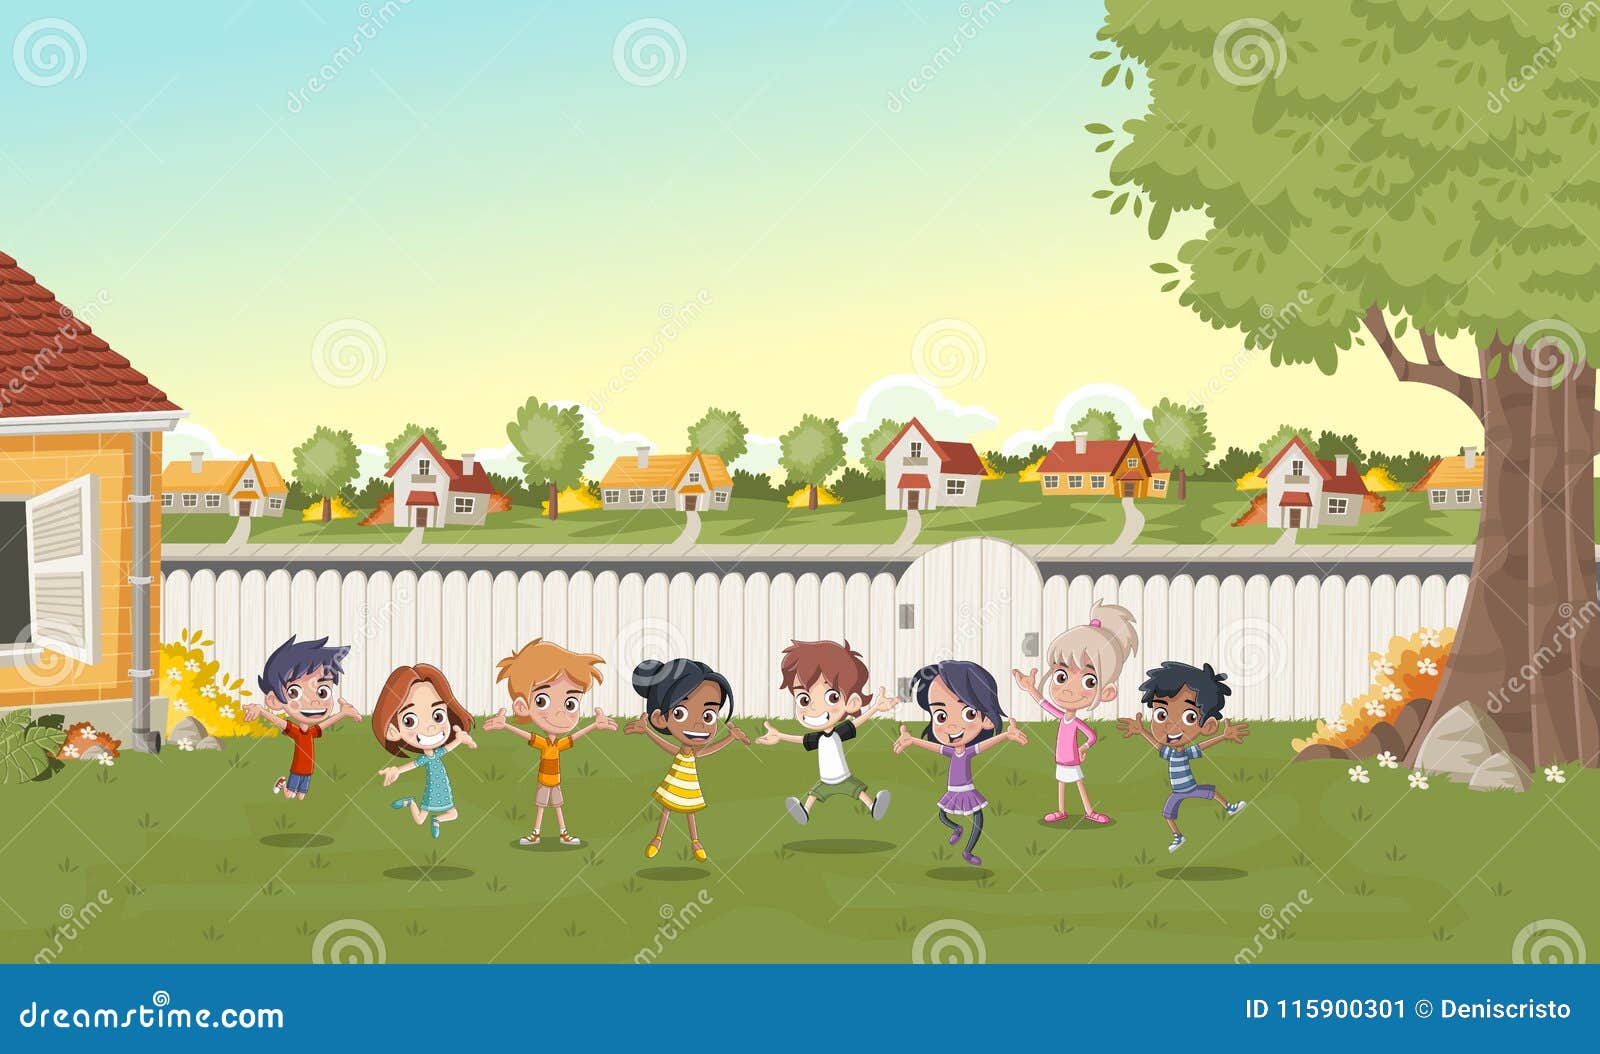 cartoon kids playing in suburb neighborhood.